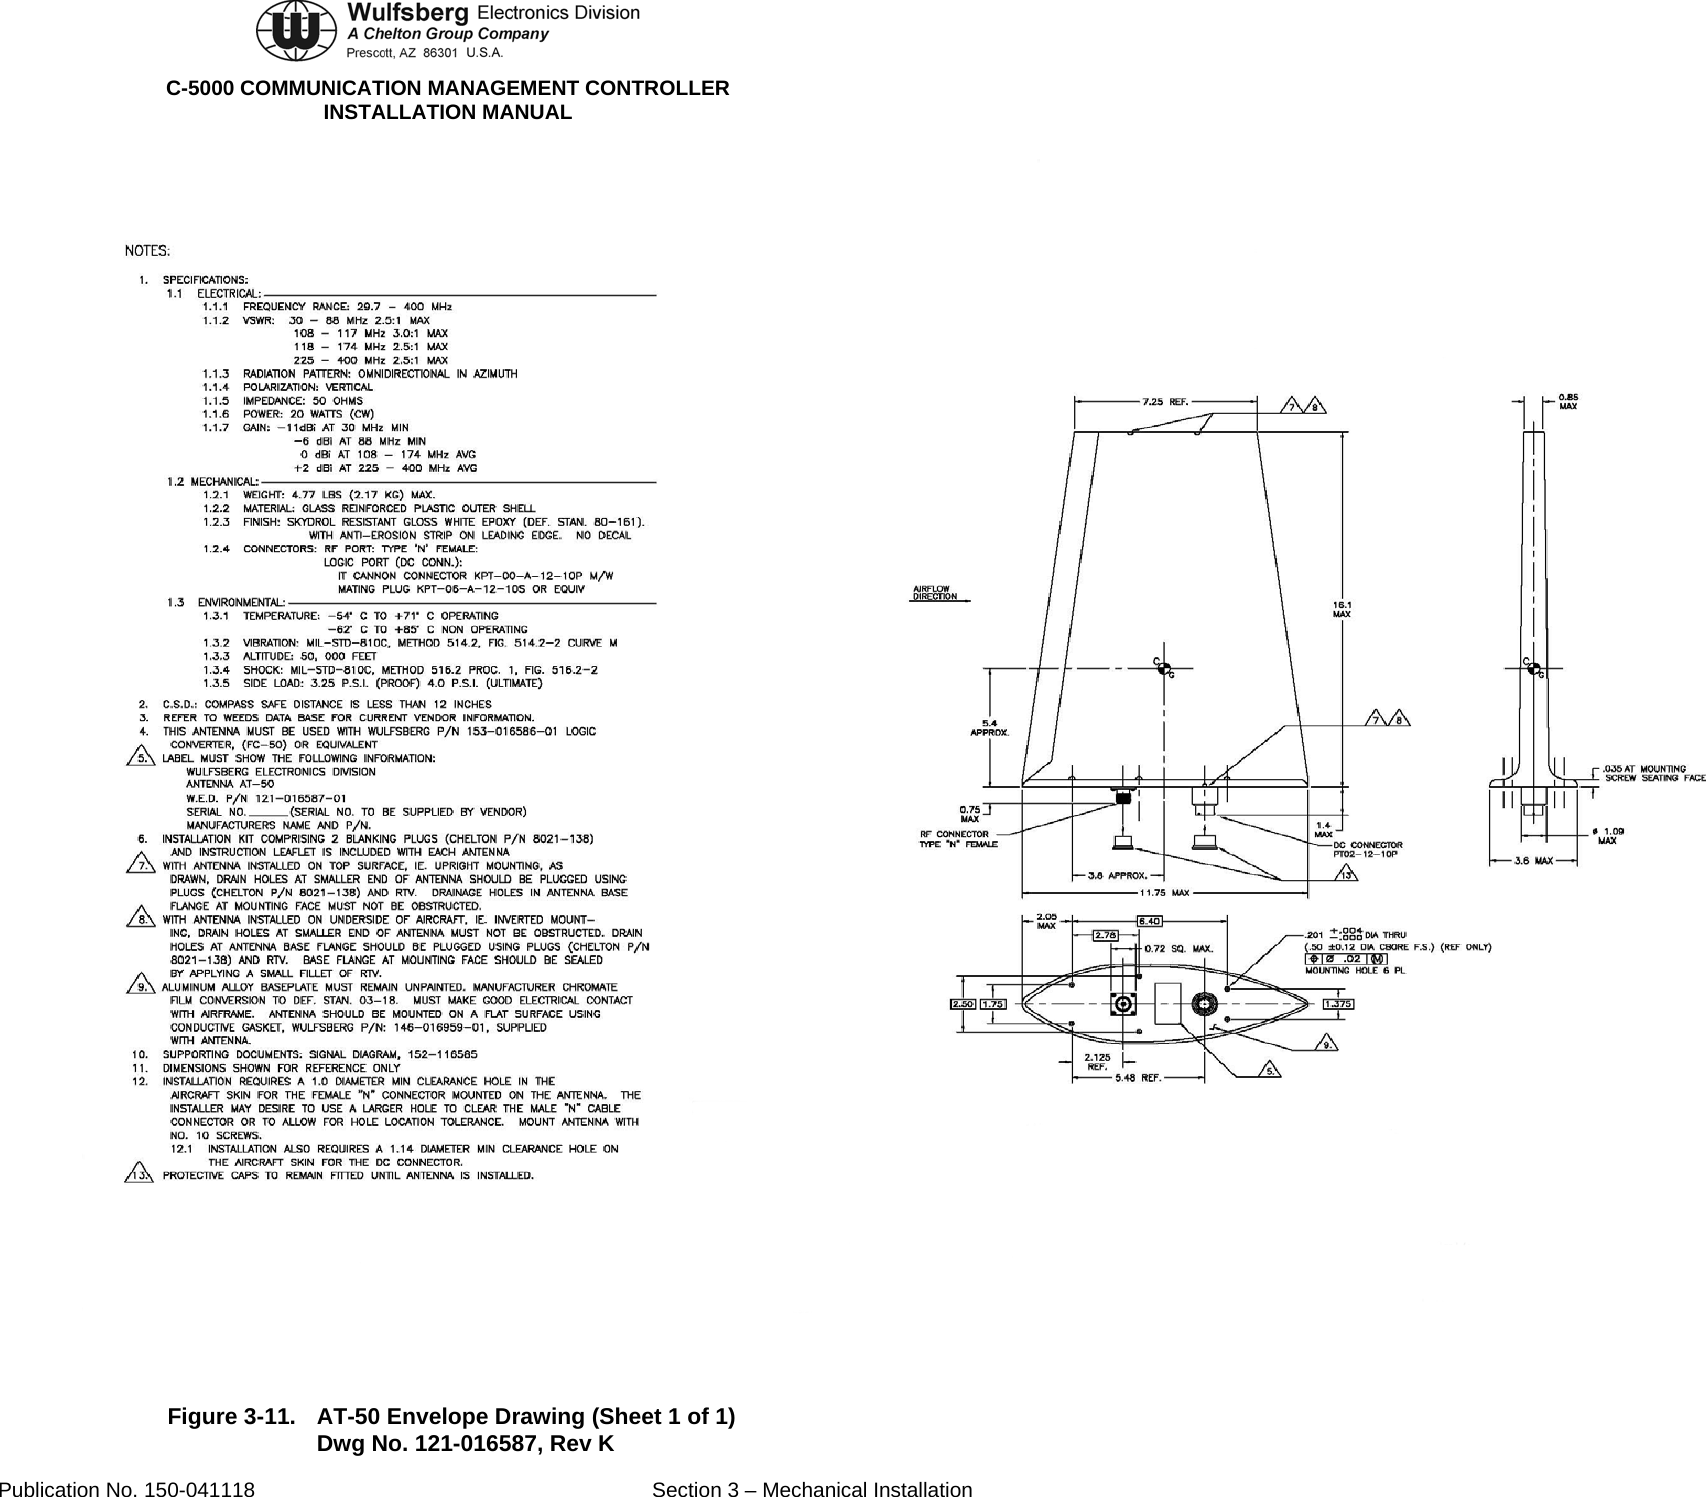  C-5000 COMMUNICATION MANAGEMENT CONTROLLER INSTALLATION MANUAL  Figure 3-11.  AT-50 Envelope Drawing (Sheet 1 of 1) Dwg No. 121-016587, Rev K Publication No. 150-041118  Section 3 – Mechanical Installation 